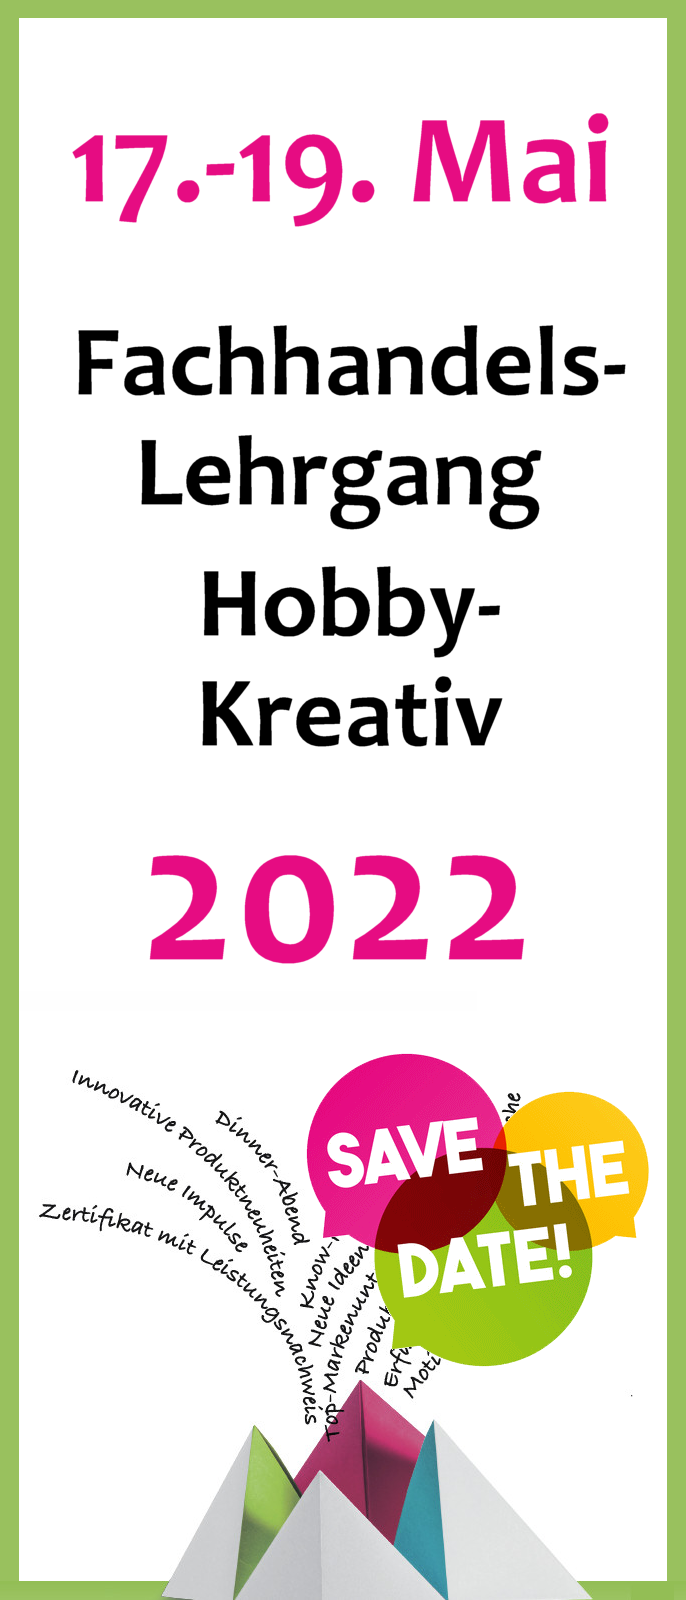 Einladung zum Fachhandels-Lehrgang Hobby-Kreativ 2022